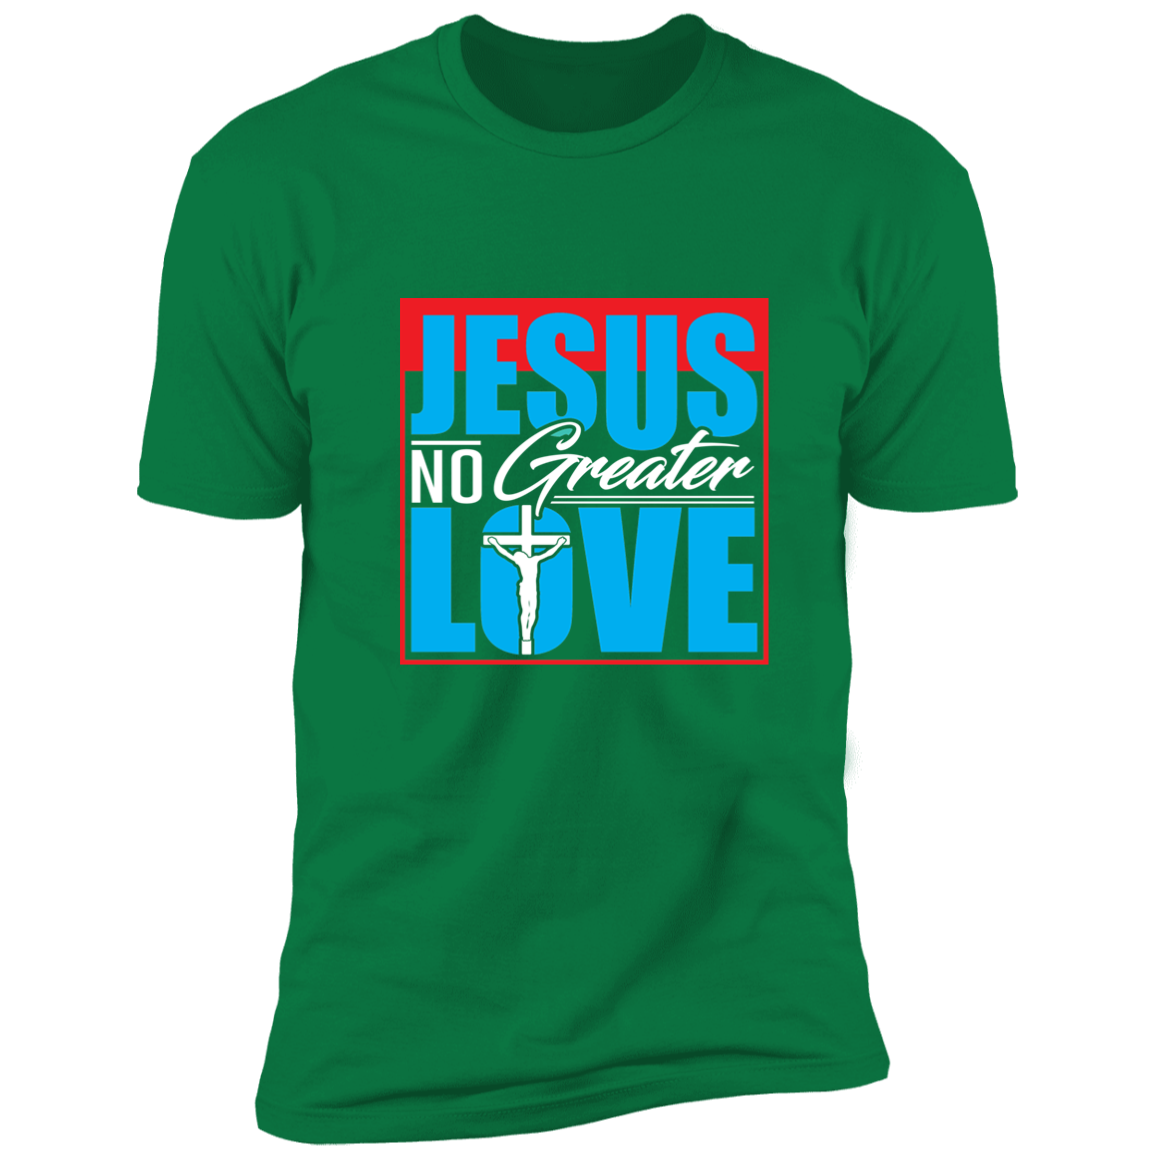 JESUS NO GREATER LOVE Short Sleeve Tee